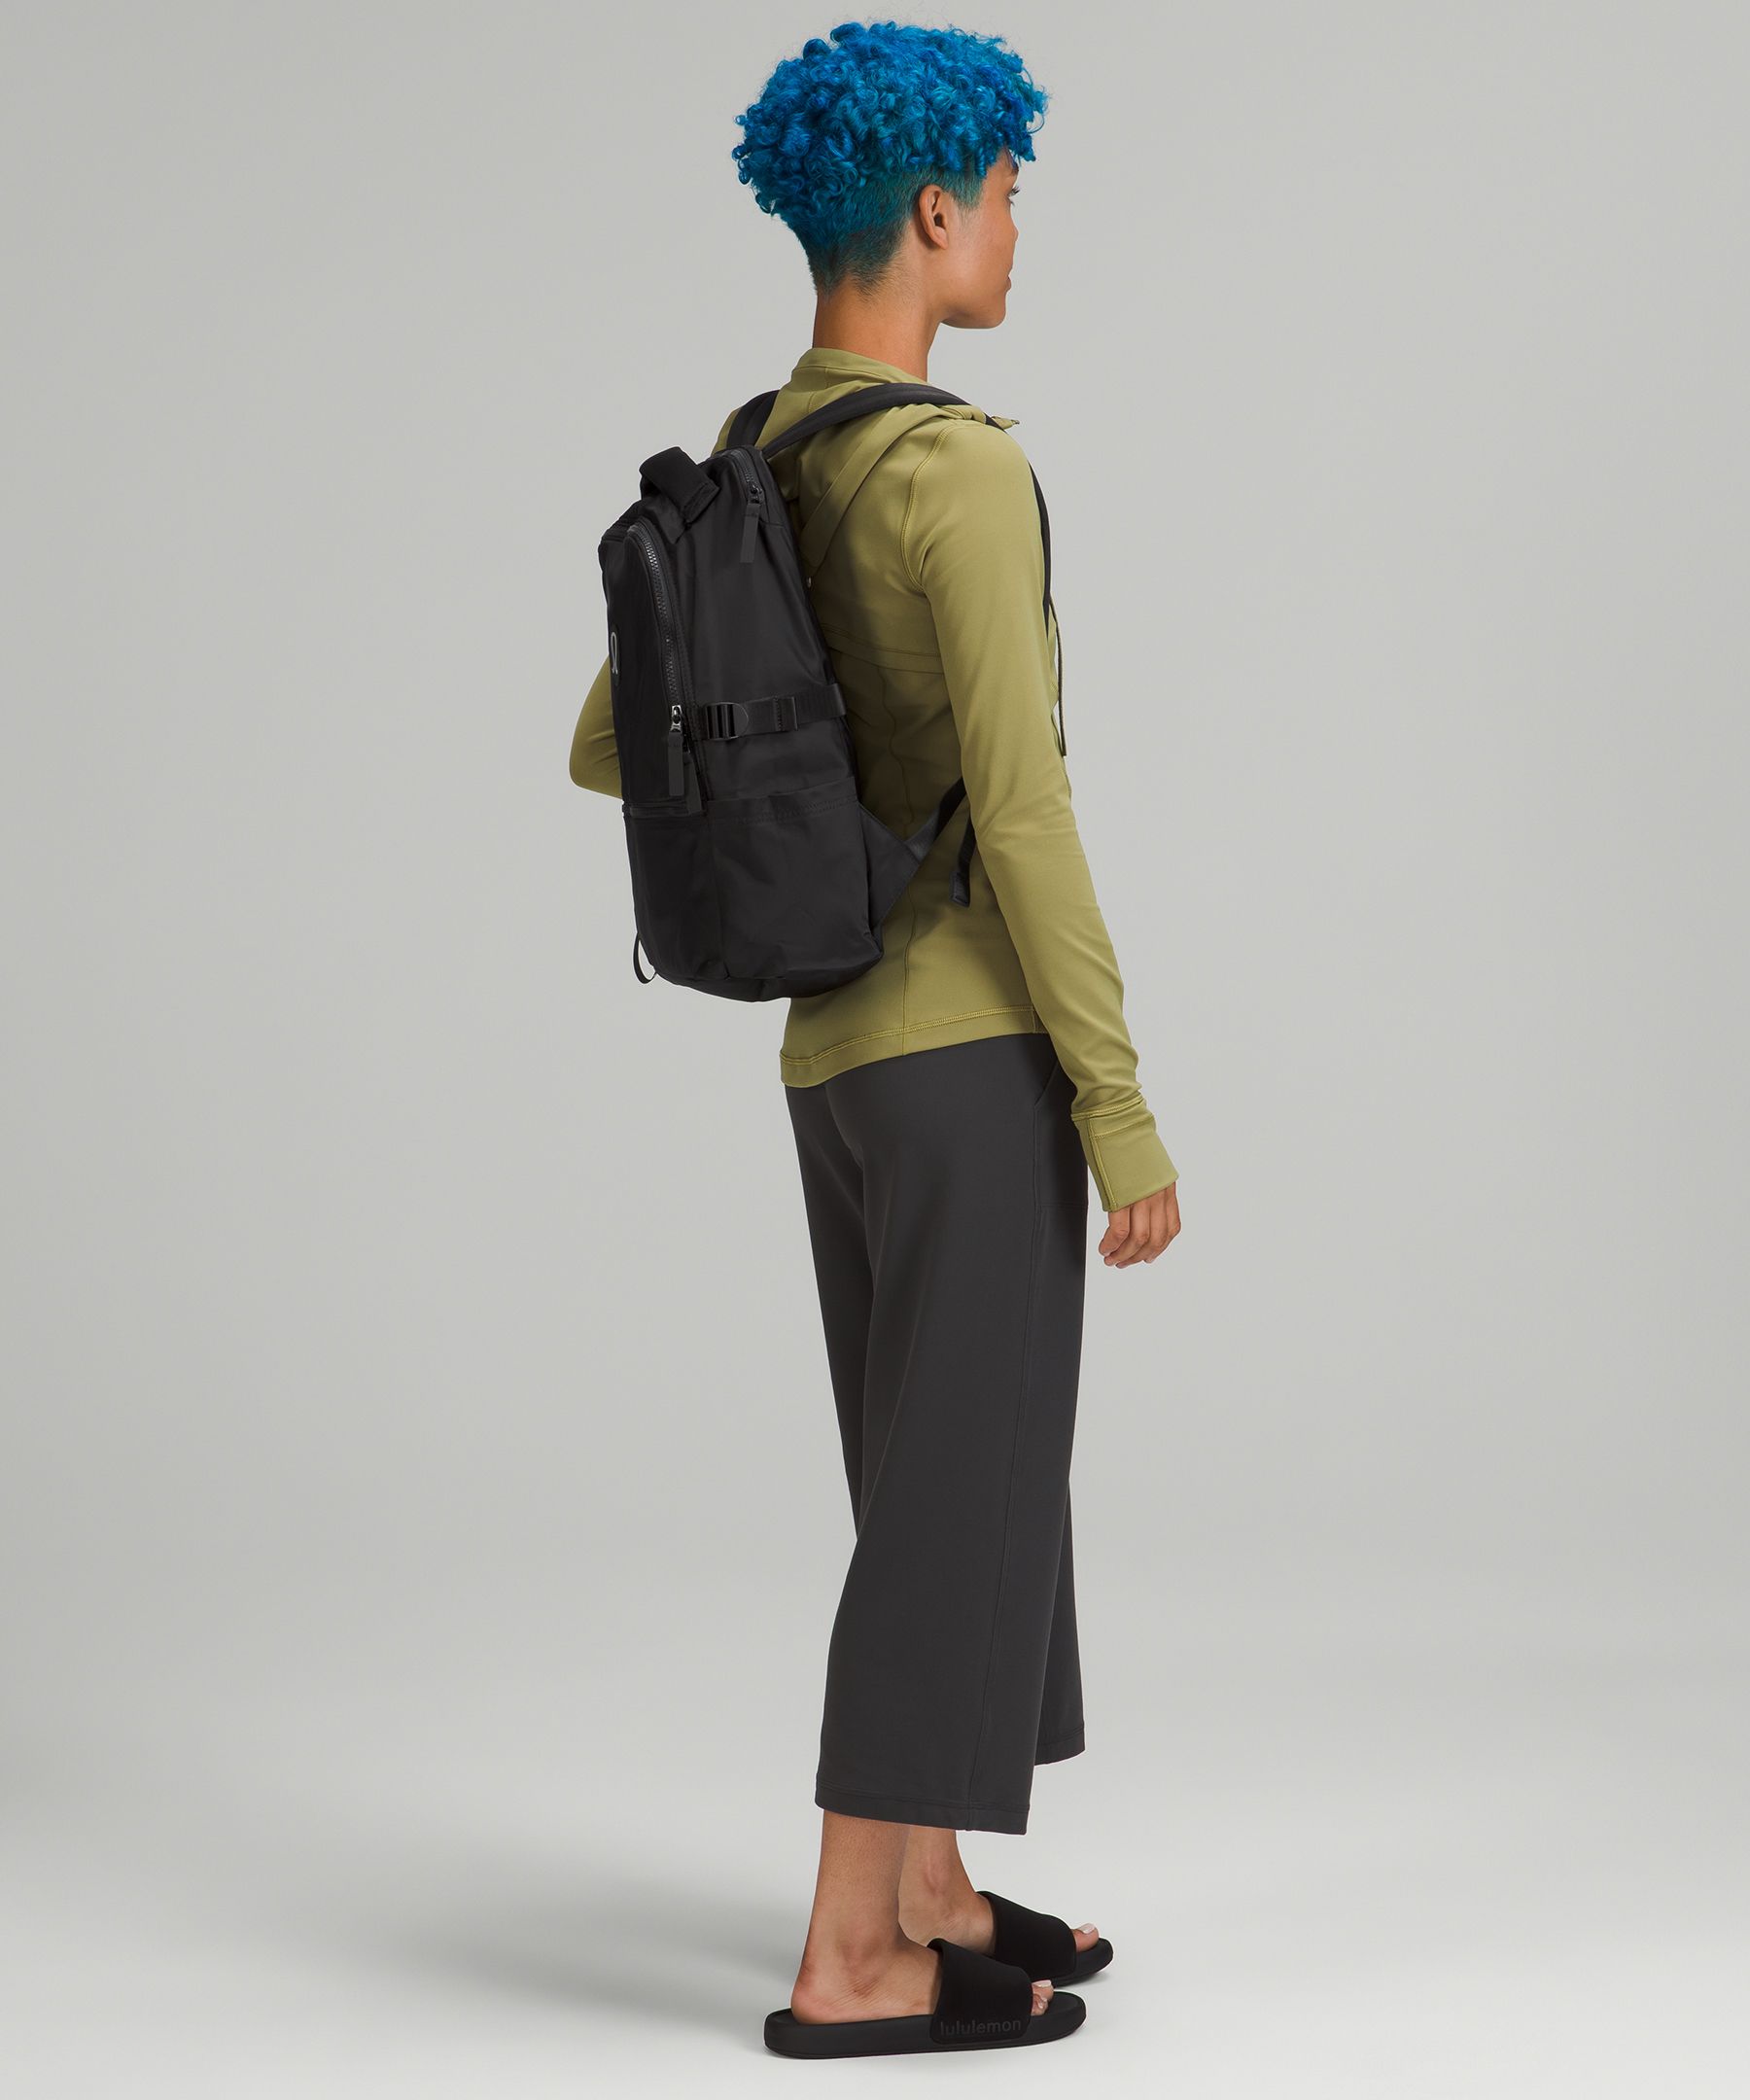 lululemon athletica backpack